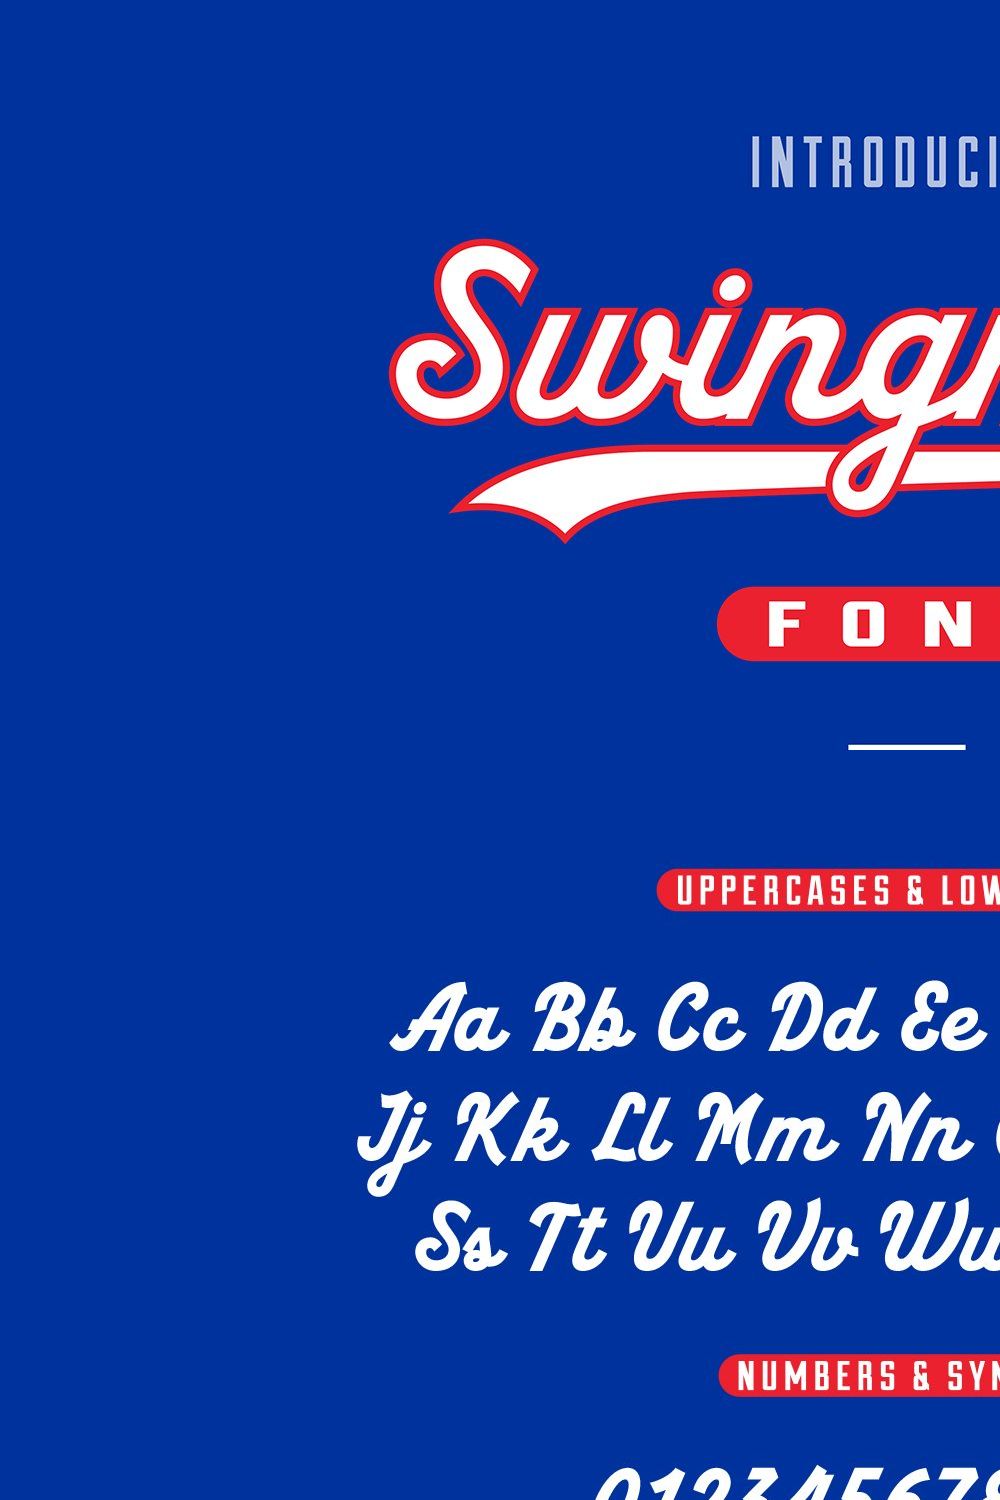 Swingman Font pinterest preview image.